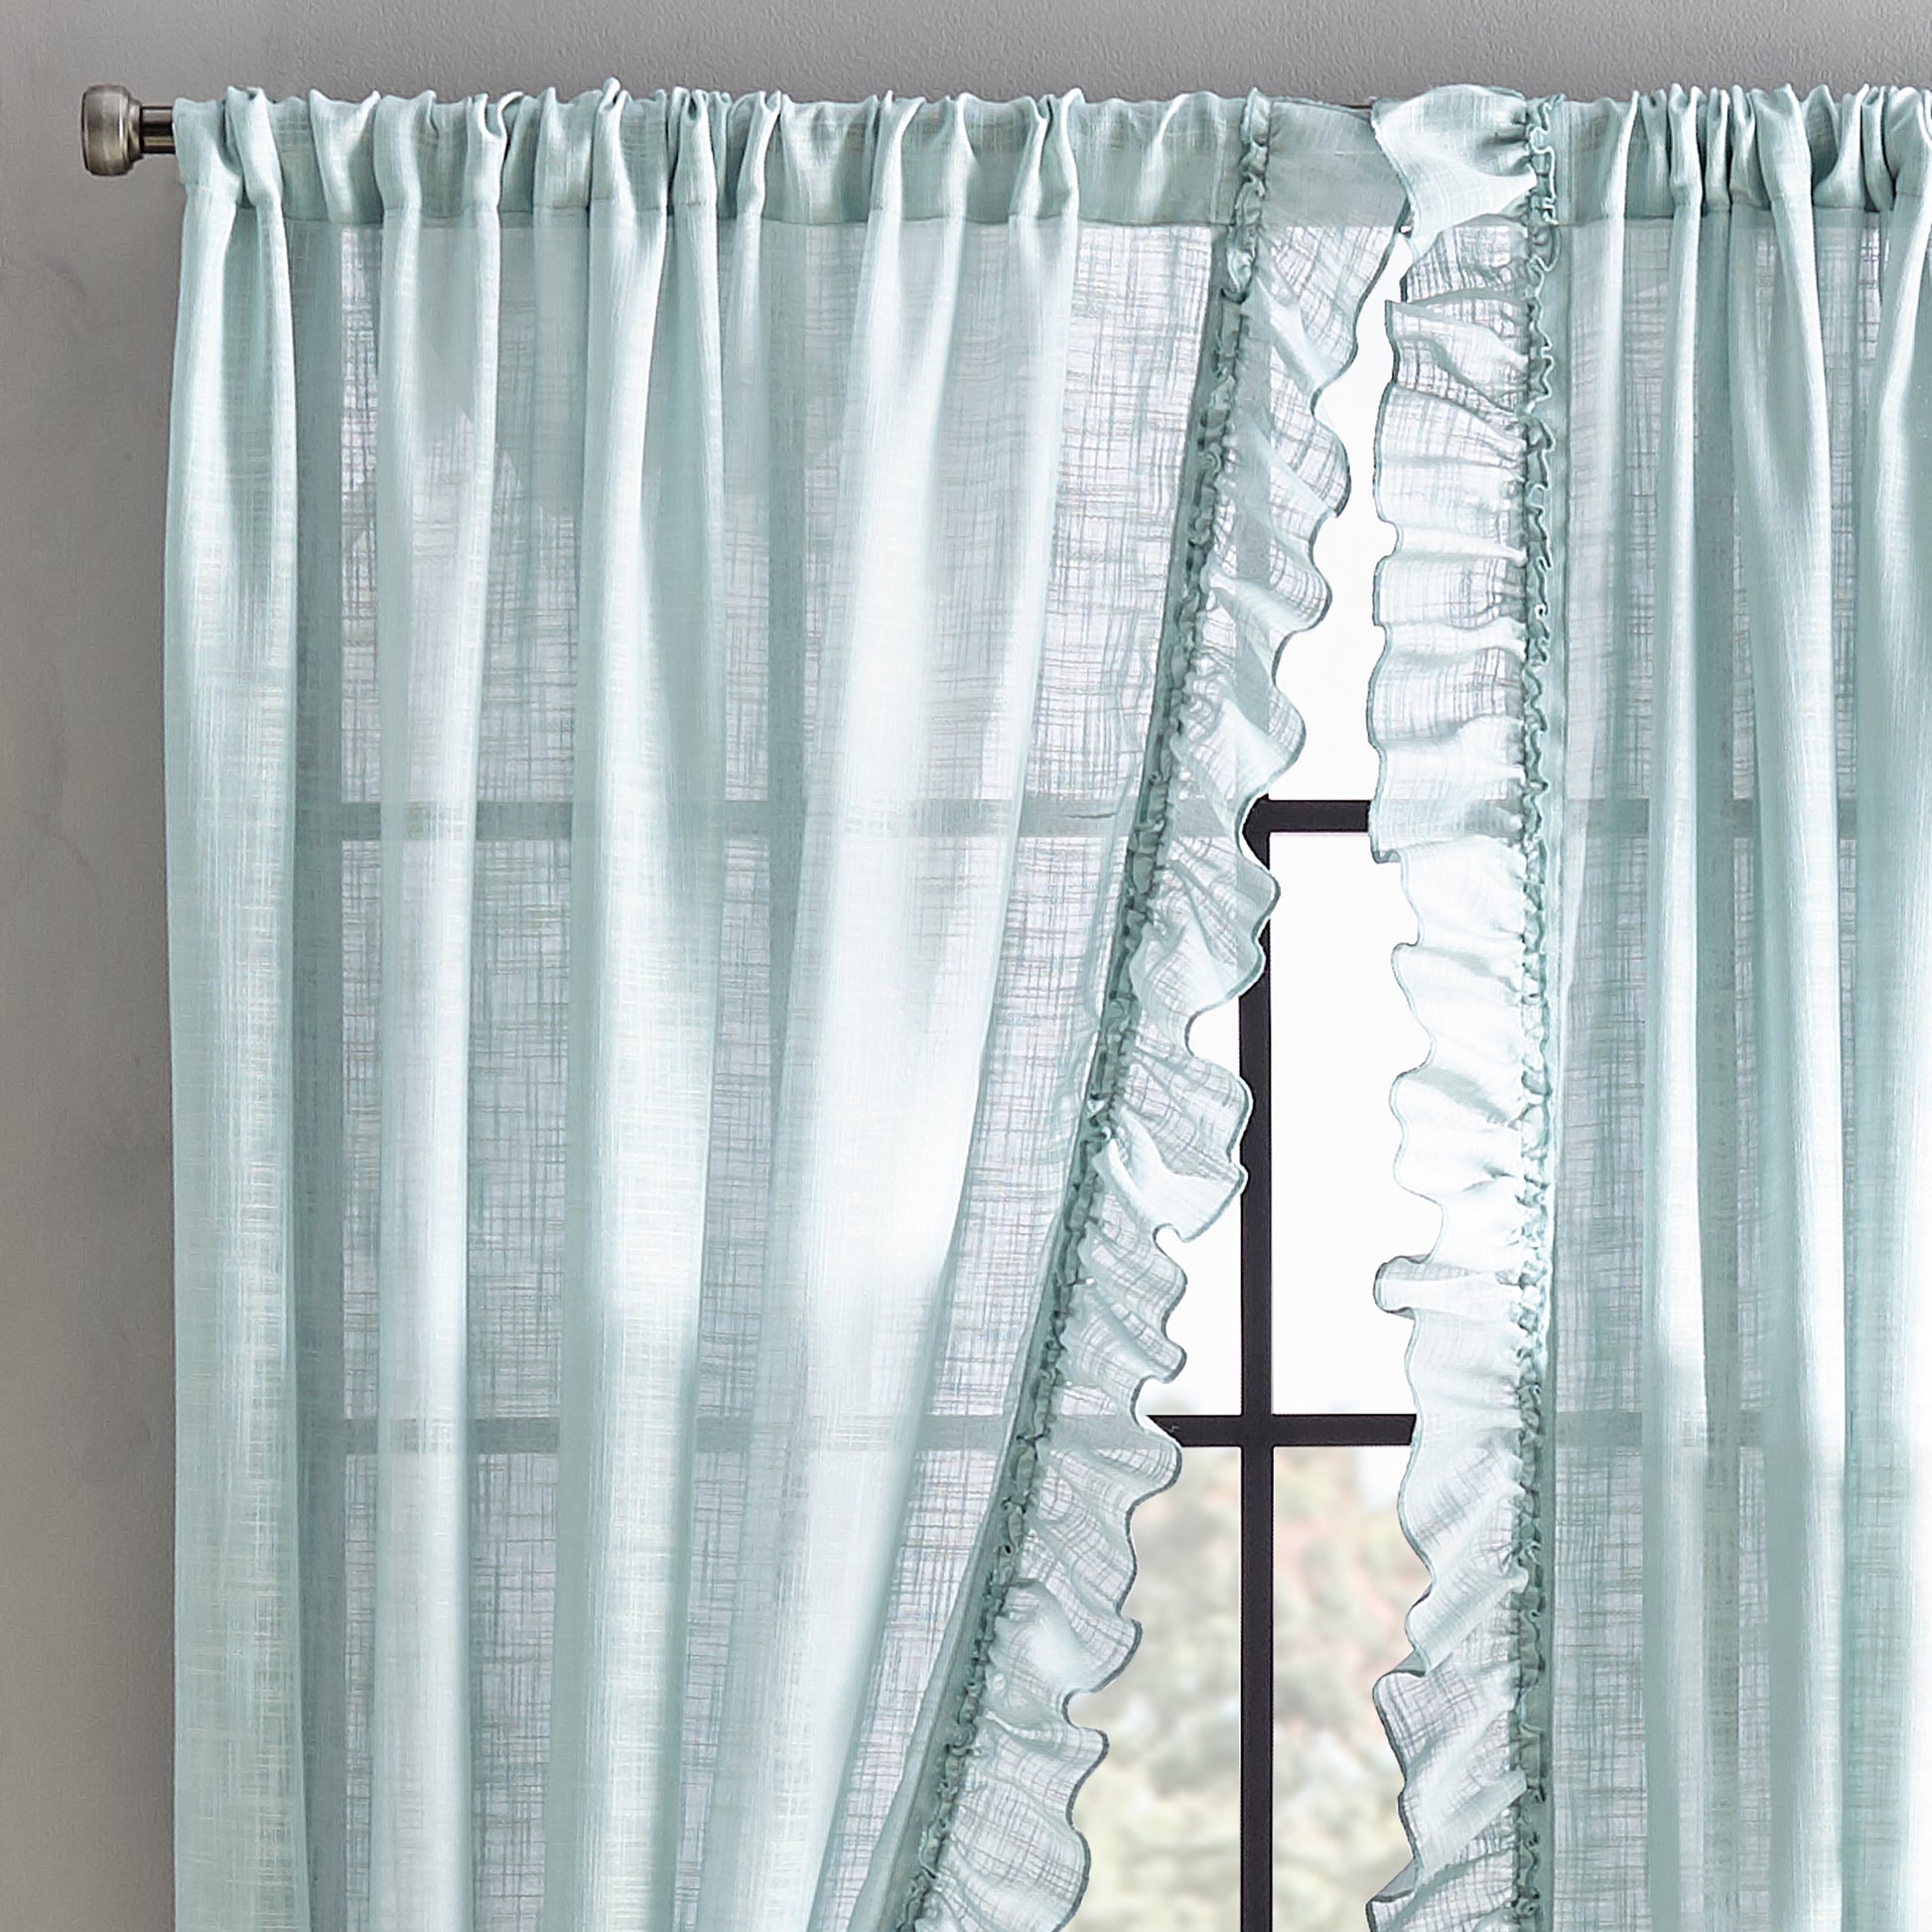 Peri Home Arabella Poletop Window Curtain Panel aqua